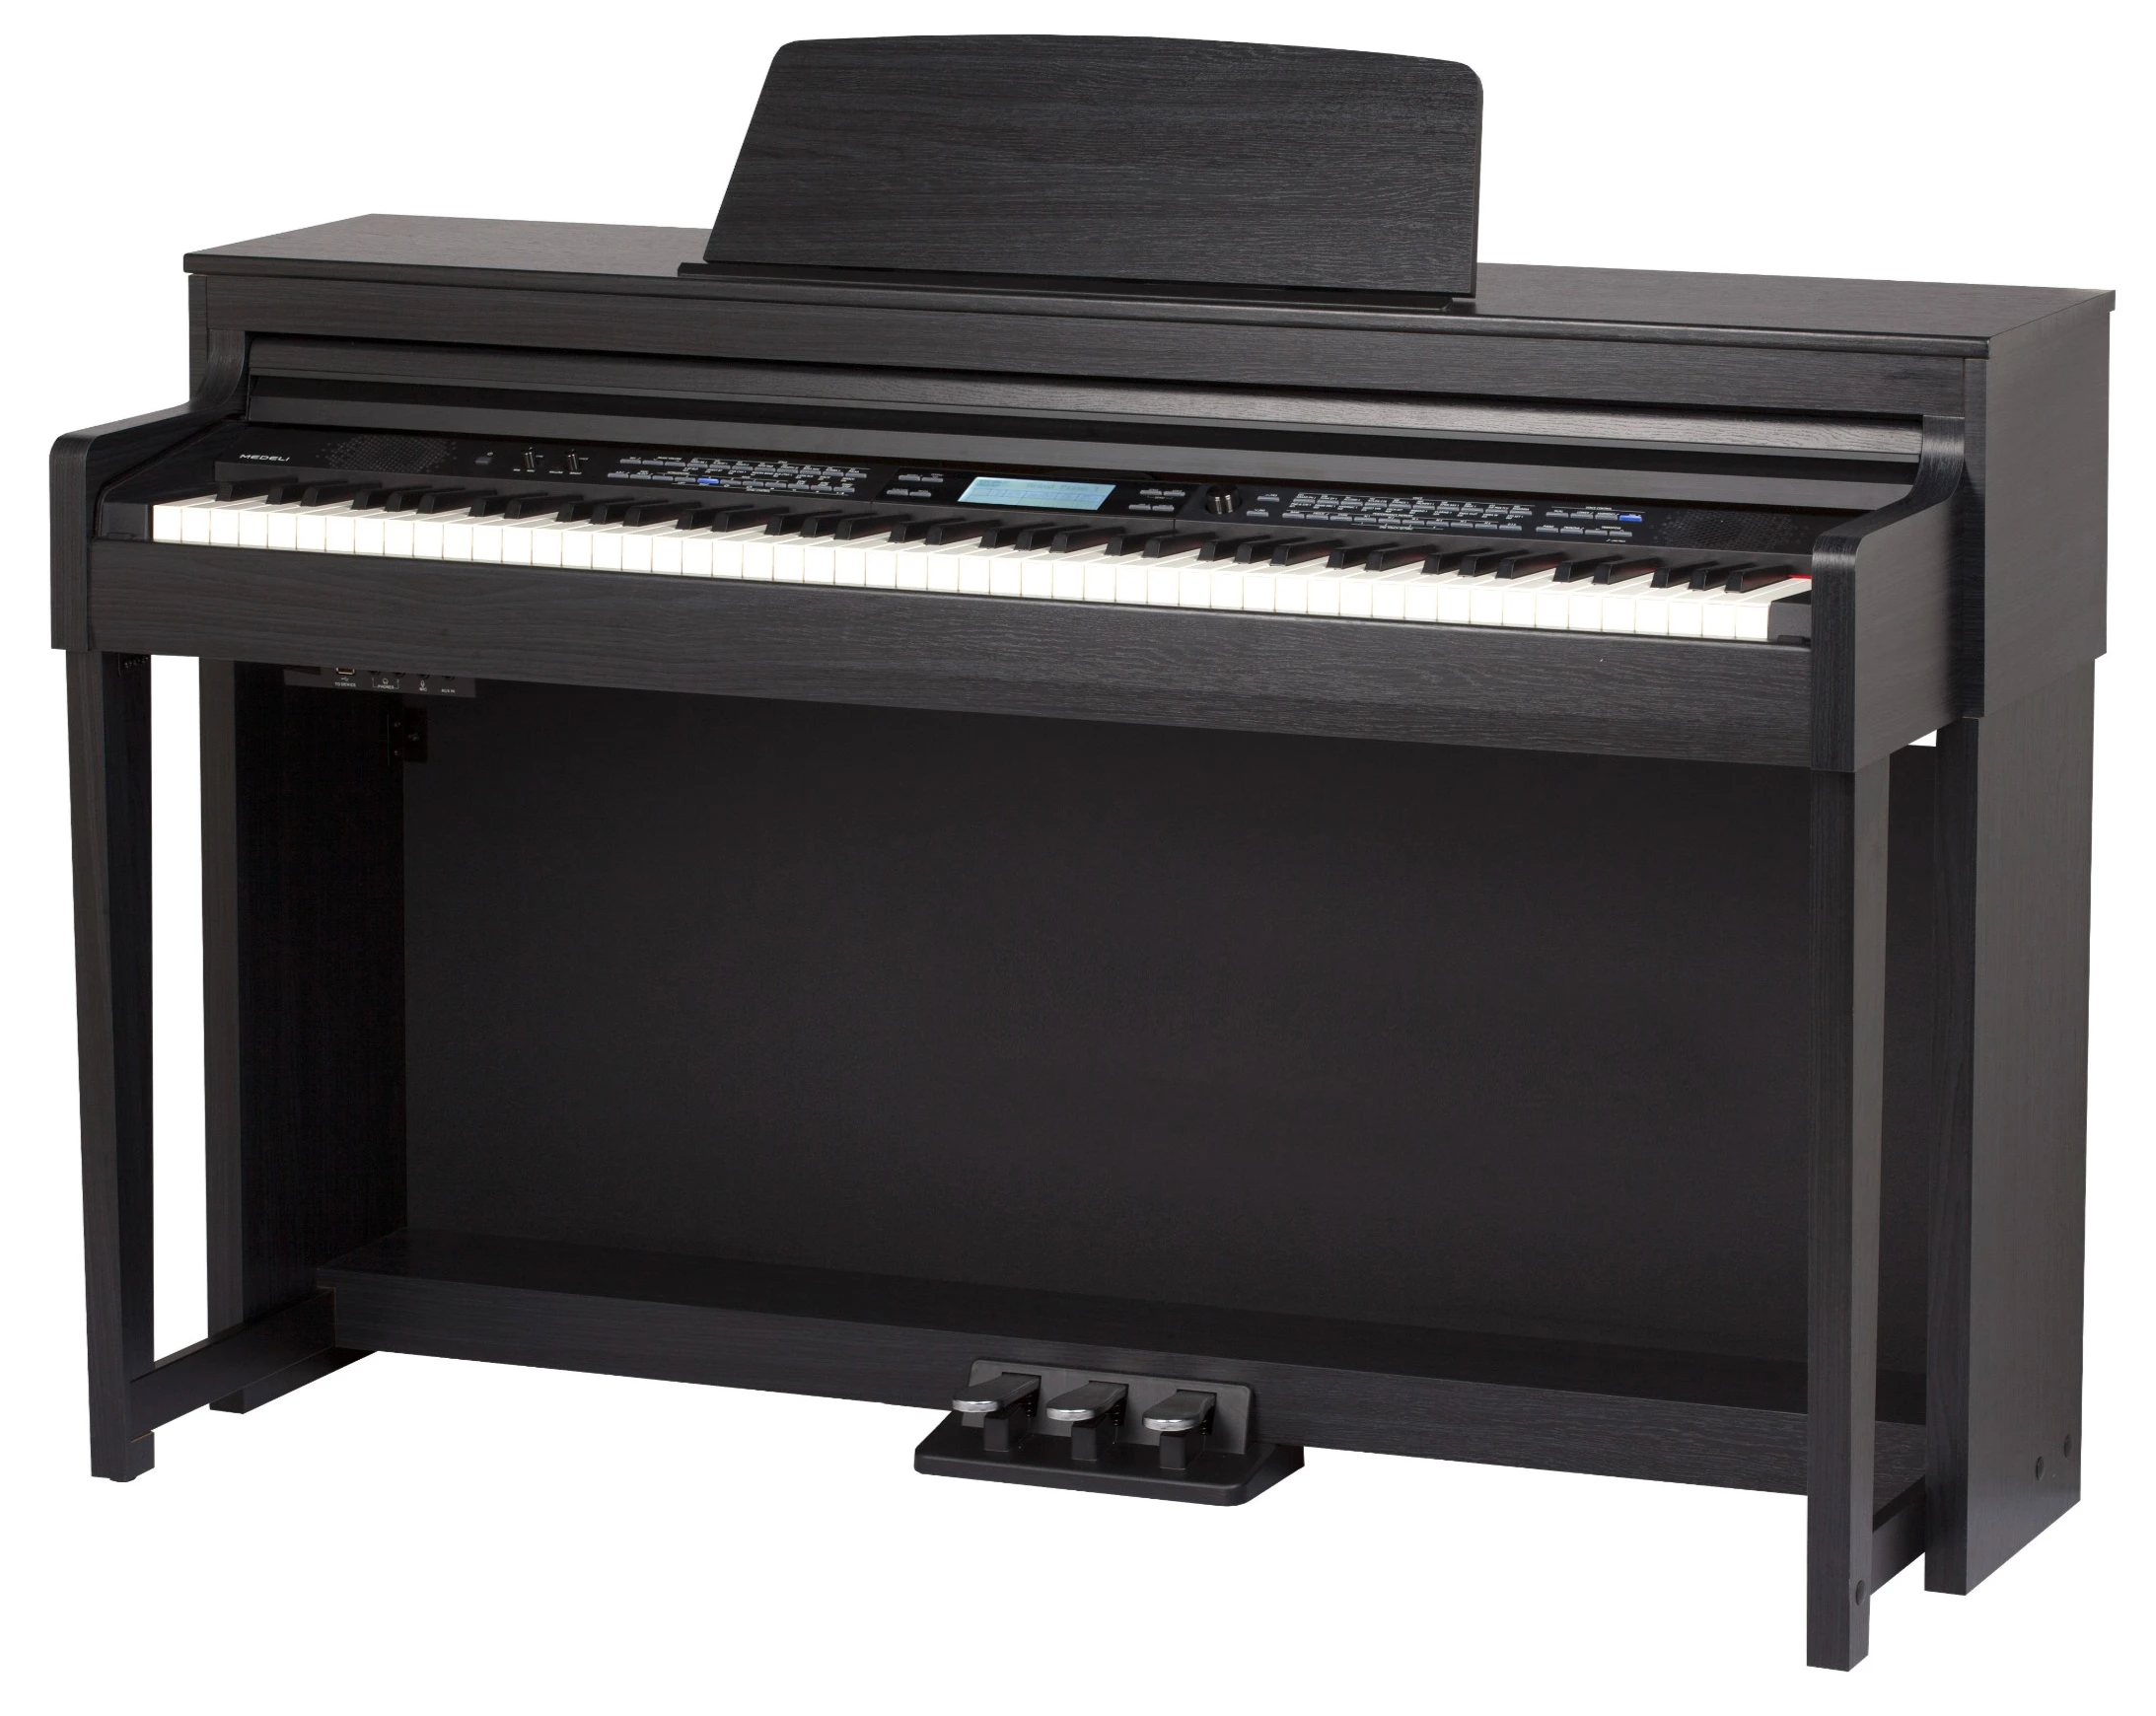 Medeli Digital Piano DP740K Piano Black